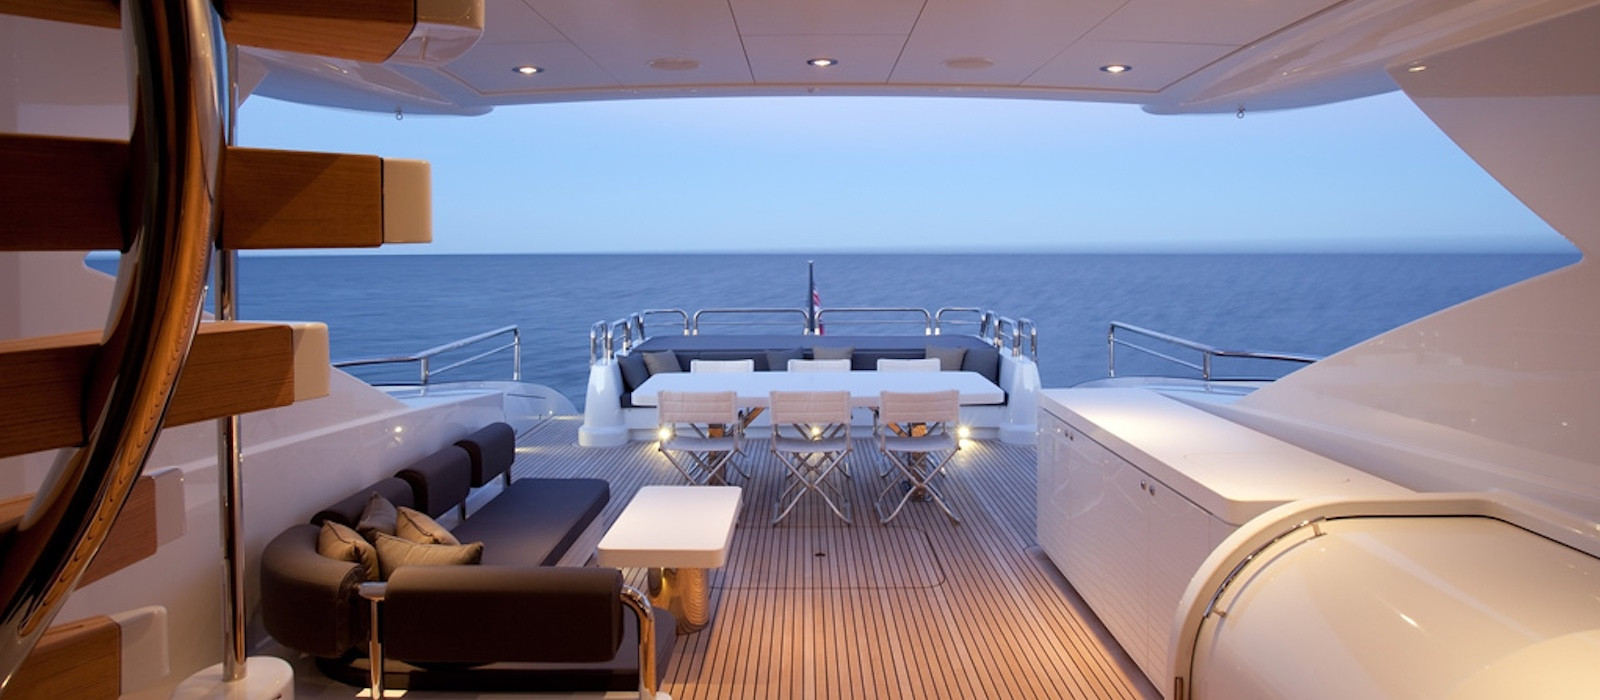 Quantum super yacht hire aft deck lounge looking out